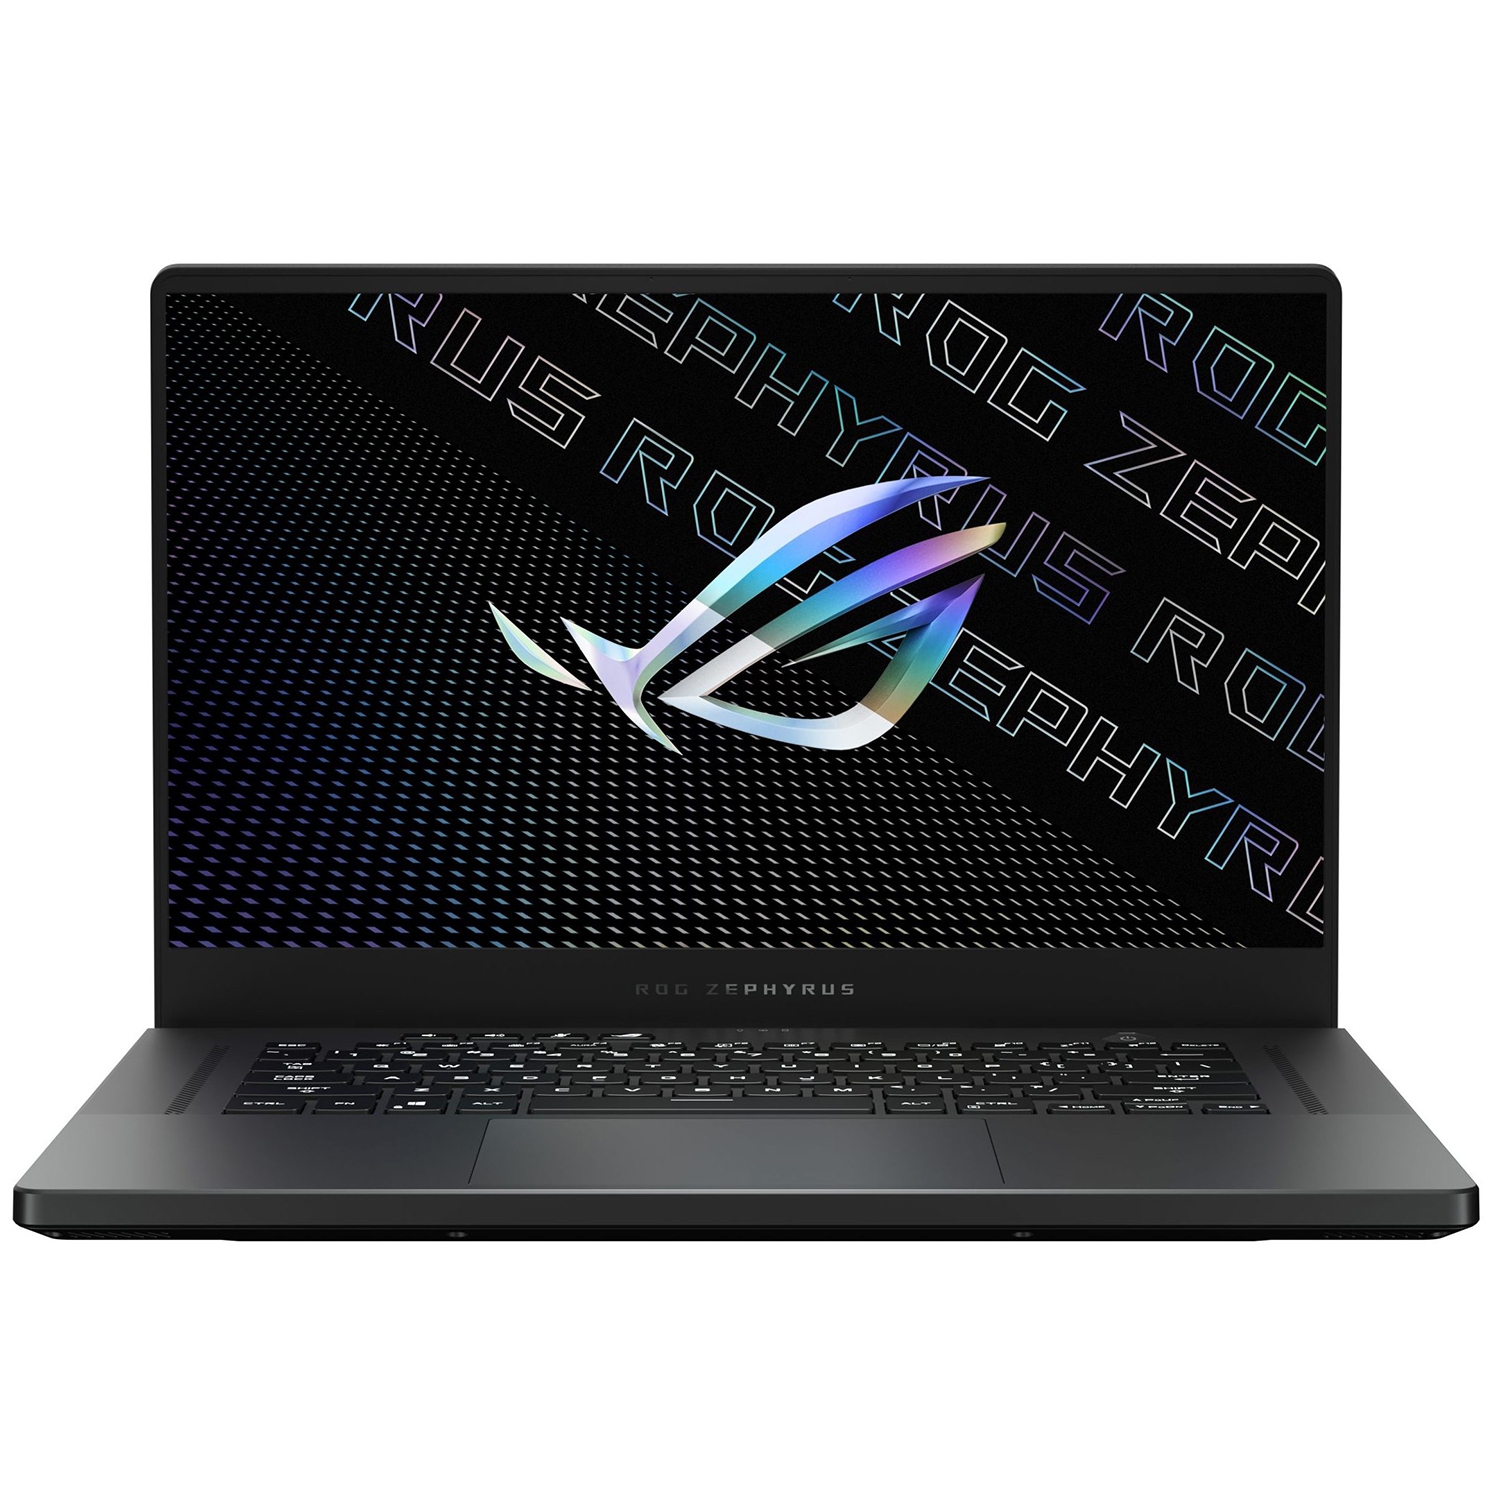 Custom ASUS ROG Zephyrus G15 Laptop (AMD Ryzen 9 5900HS, 24GB RAM, 512GB PCIe SSD, NVIDIA RTX 3060, Win 10 Home)